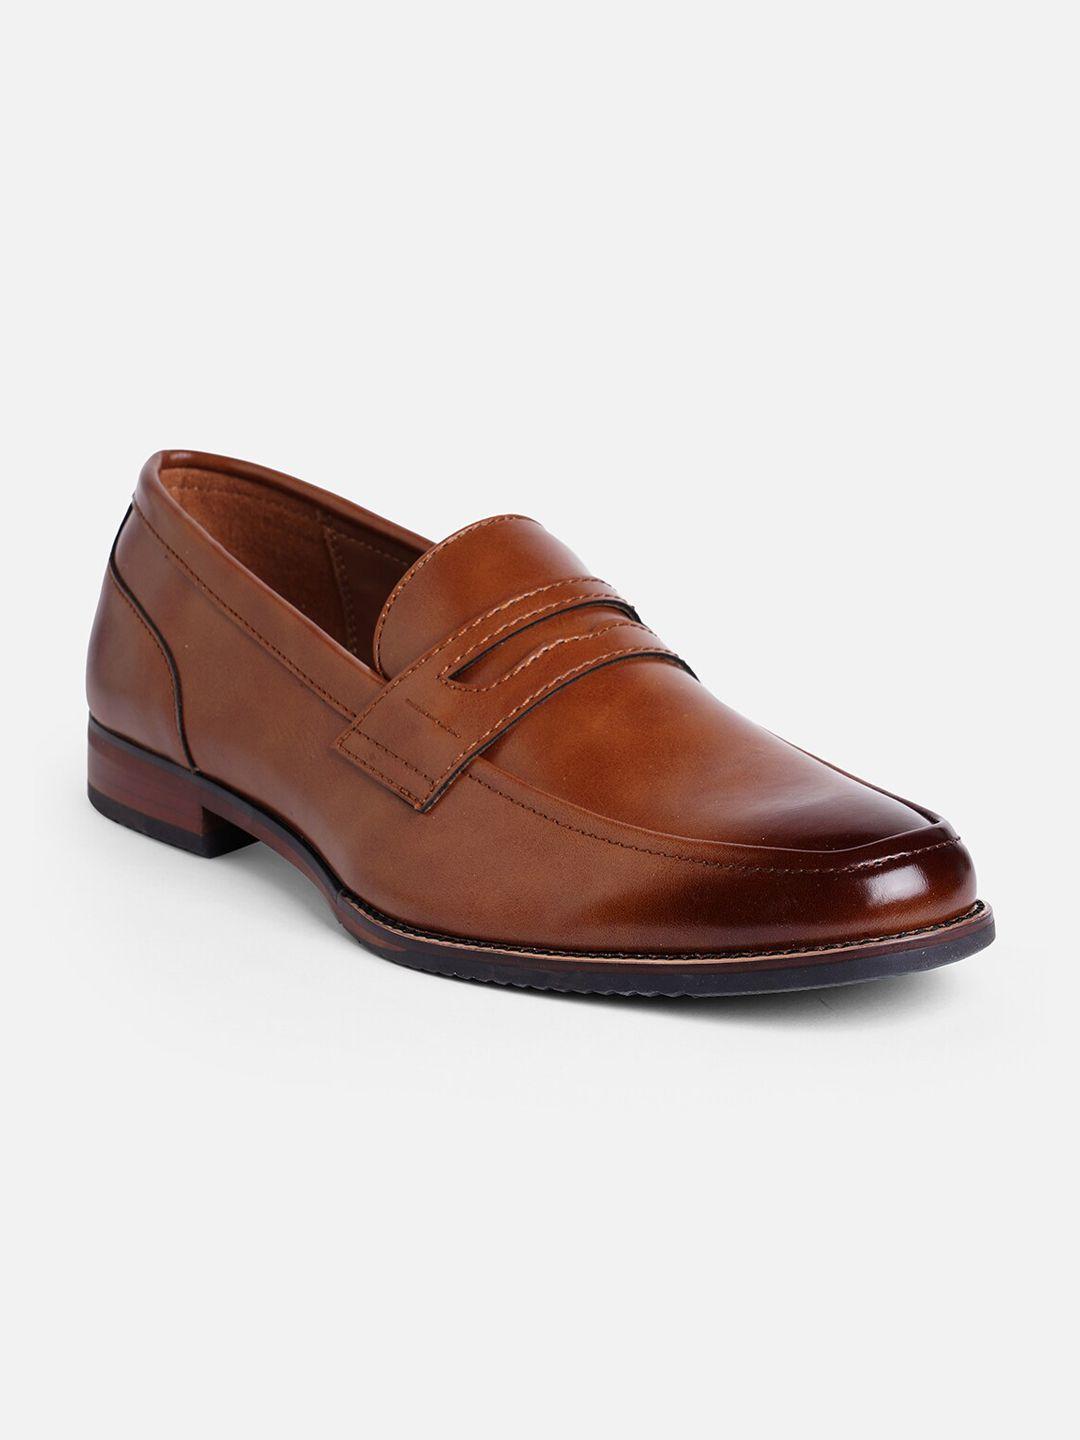 call-it-spring-men-slip-on-formal-loafers